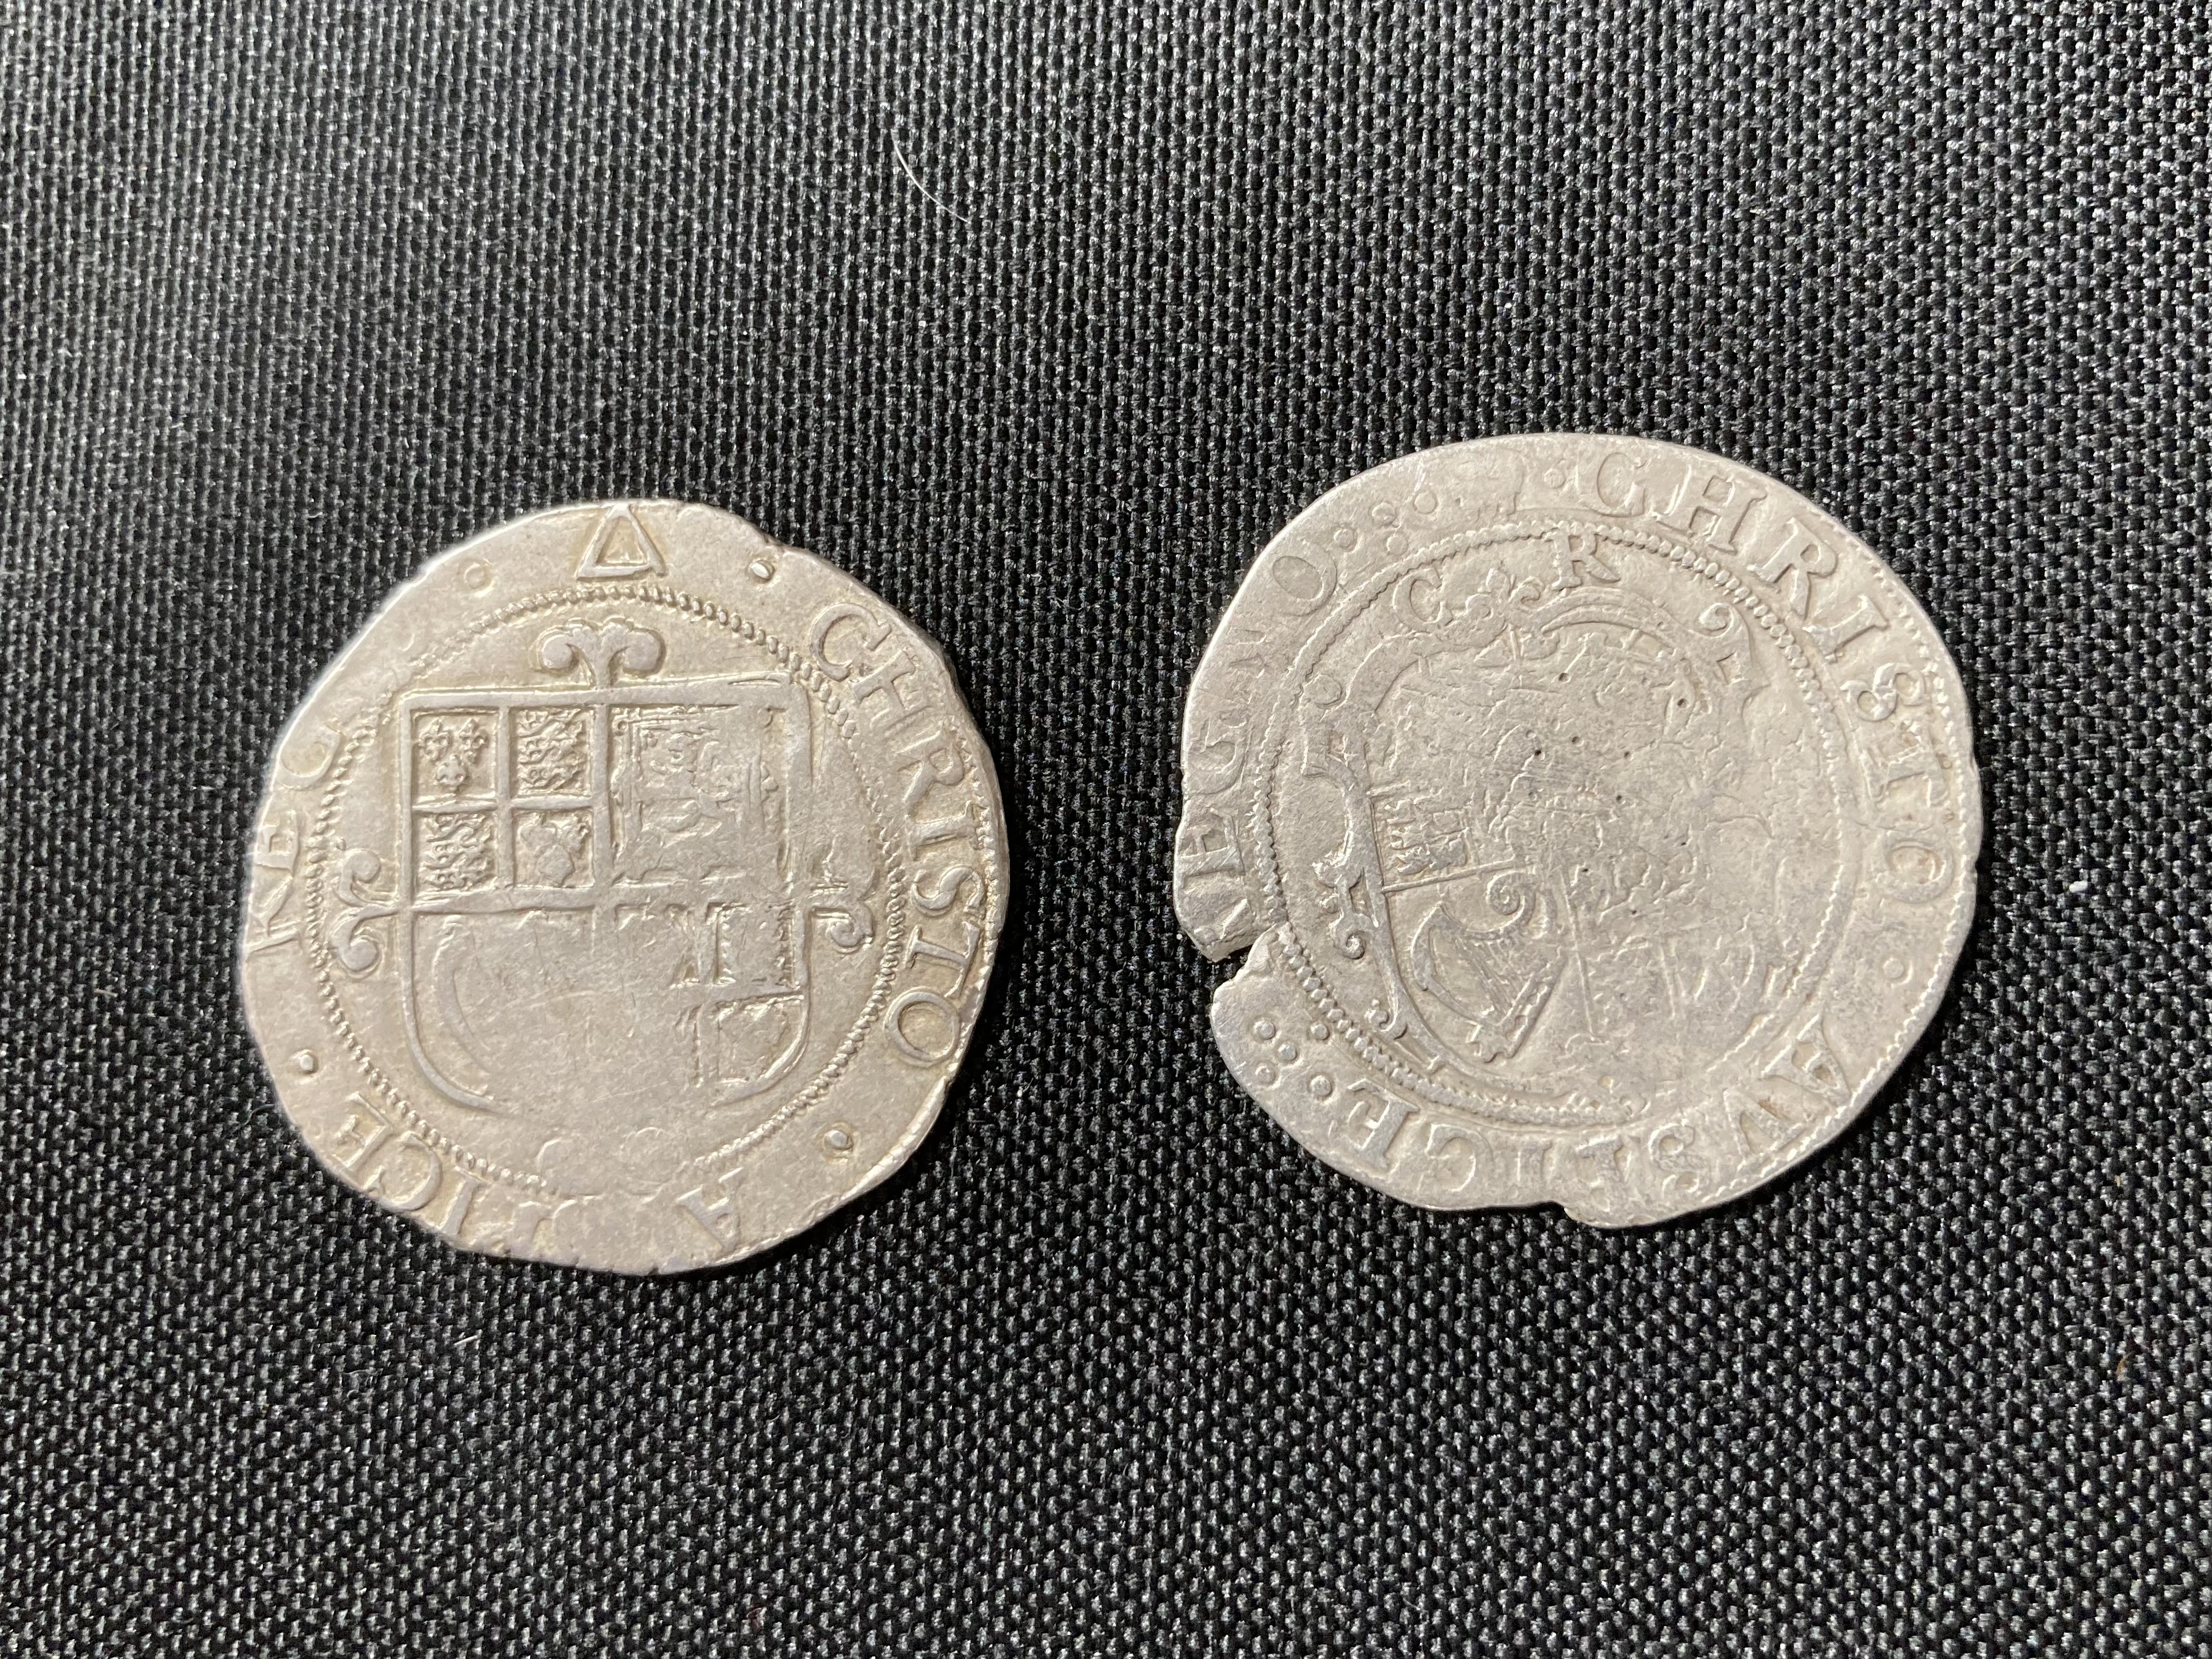 2 x Charles I shillings